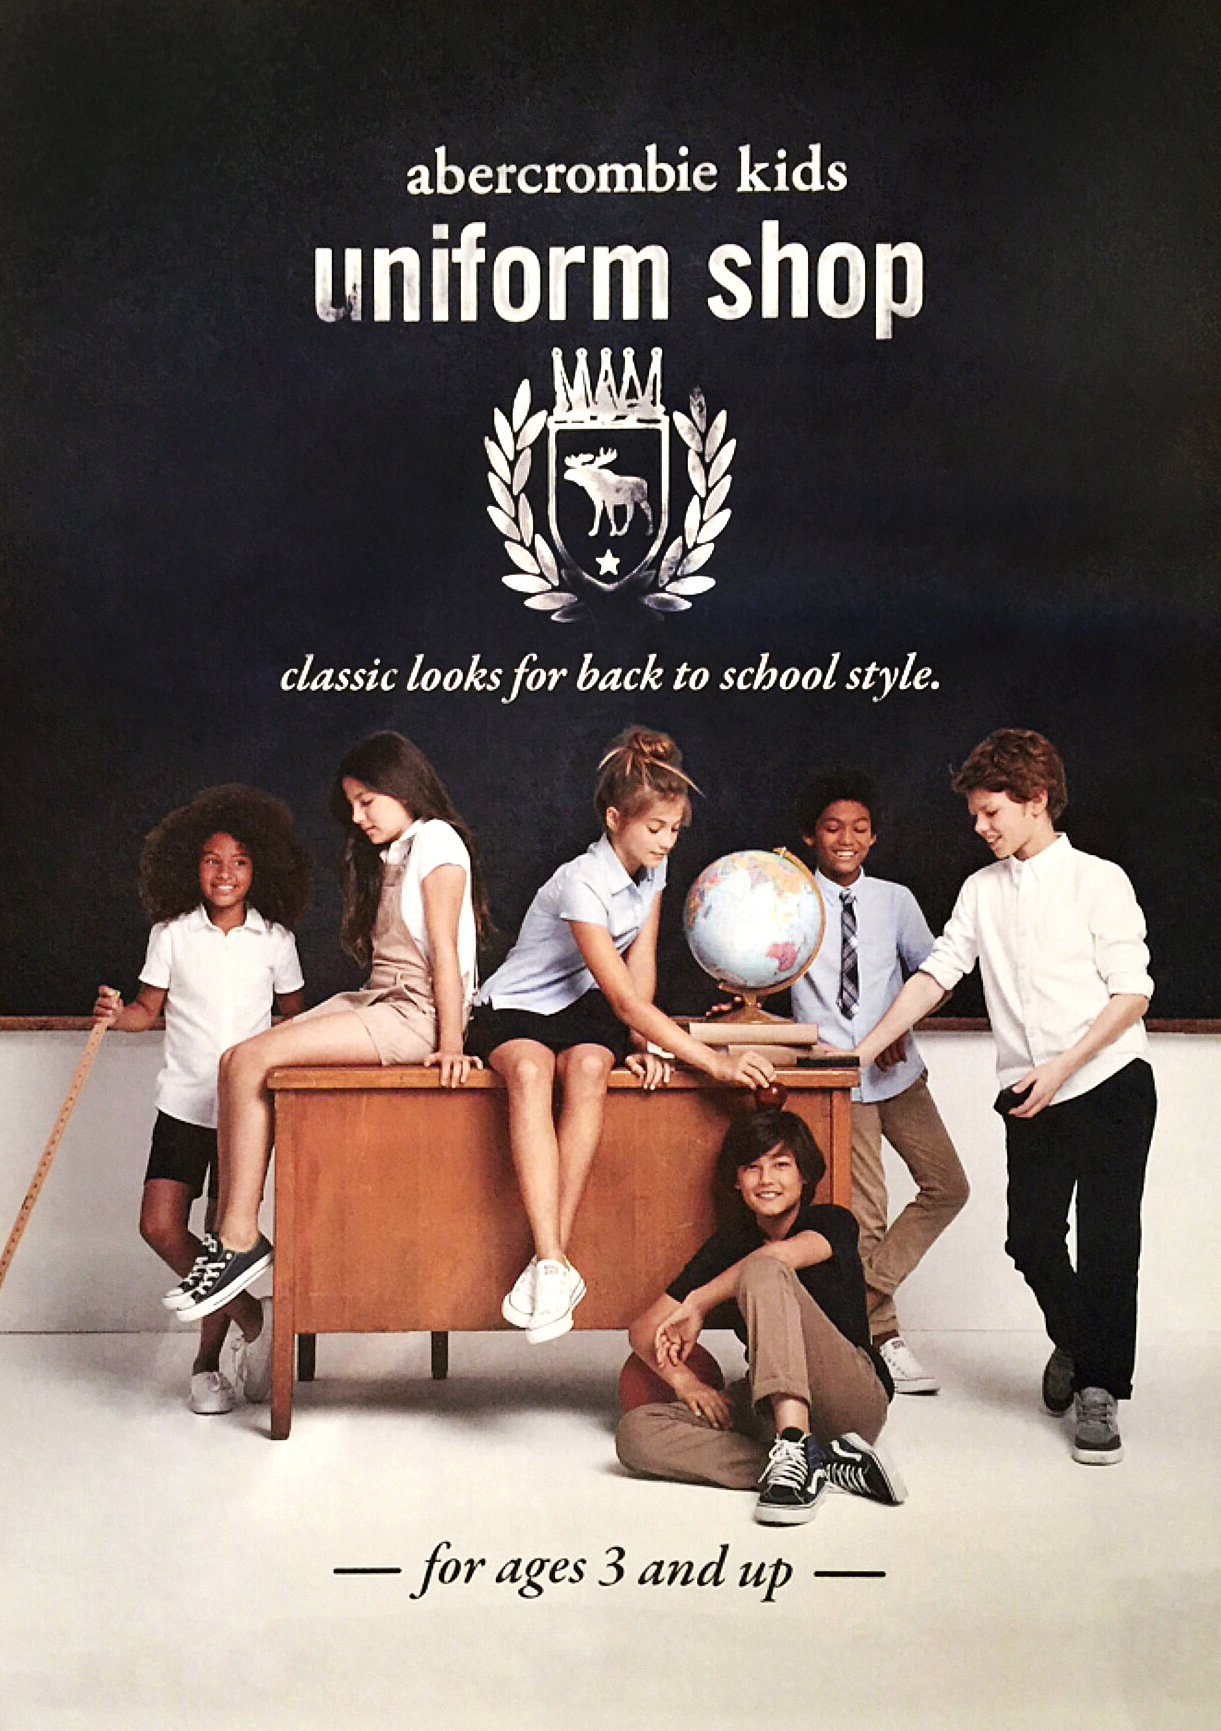 abercrombie kids uniforms